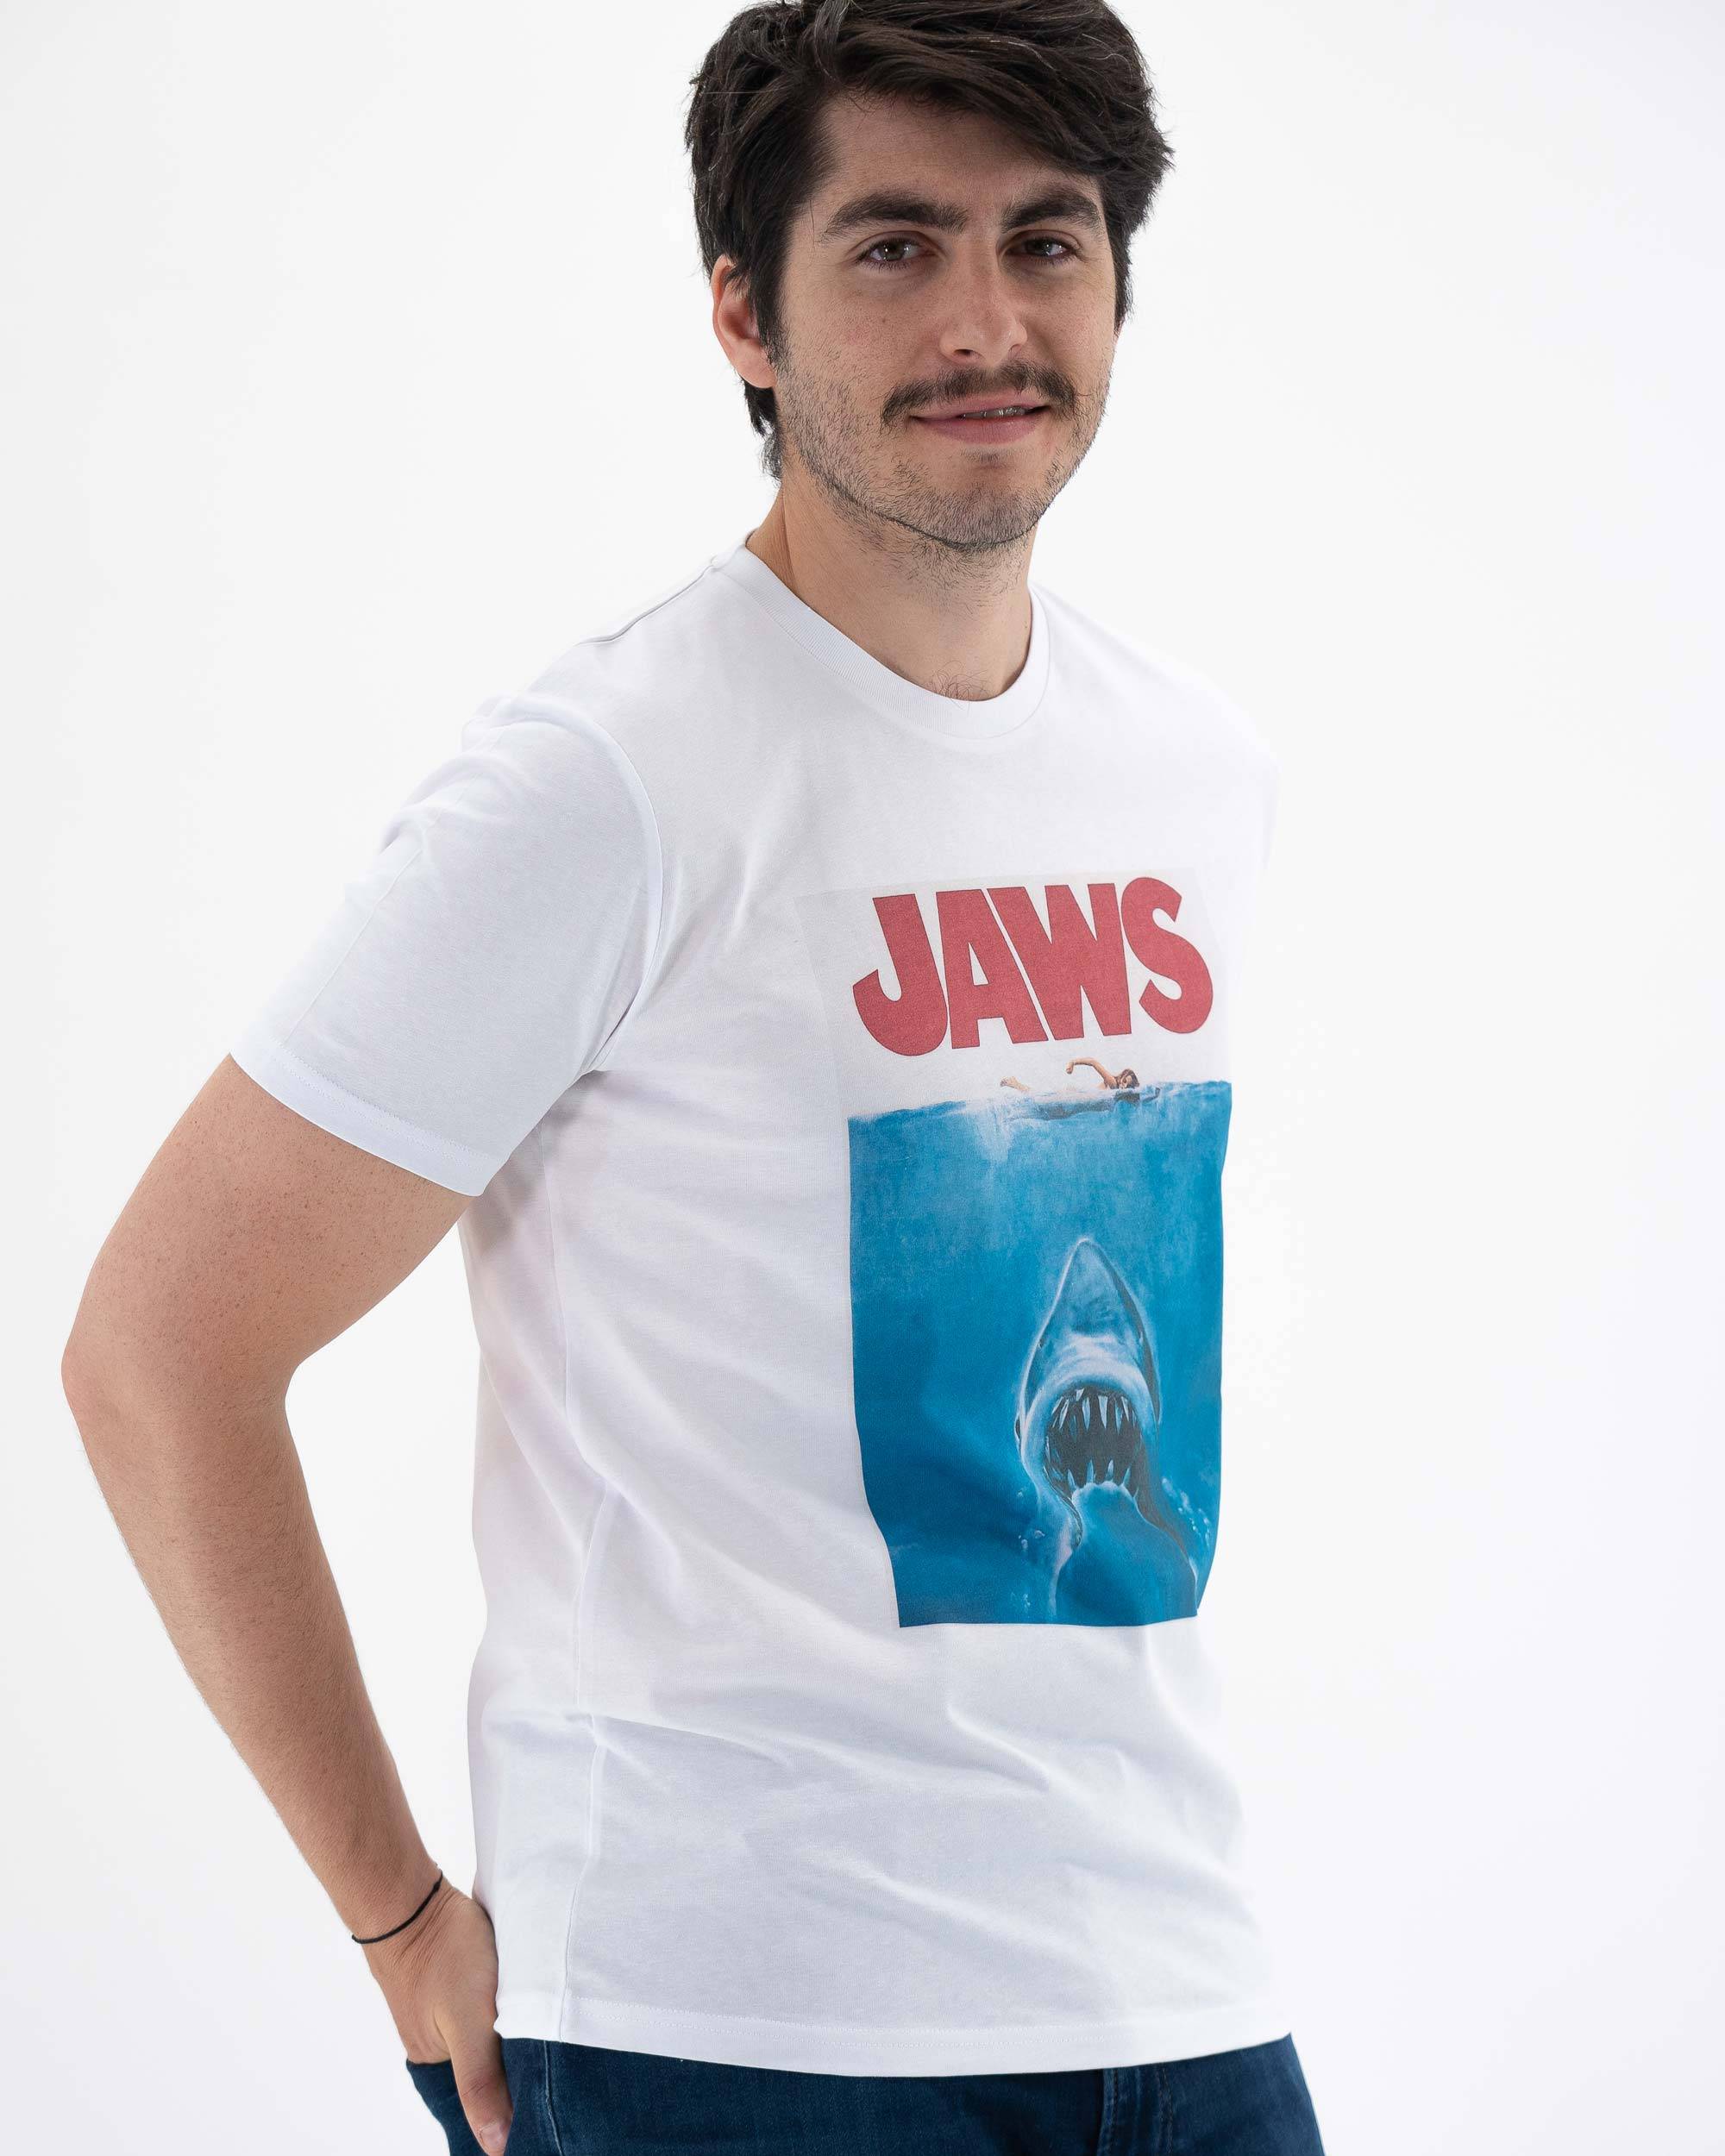 T-shirt Jaws Grafitee